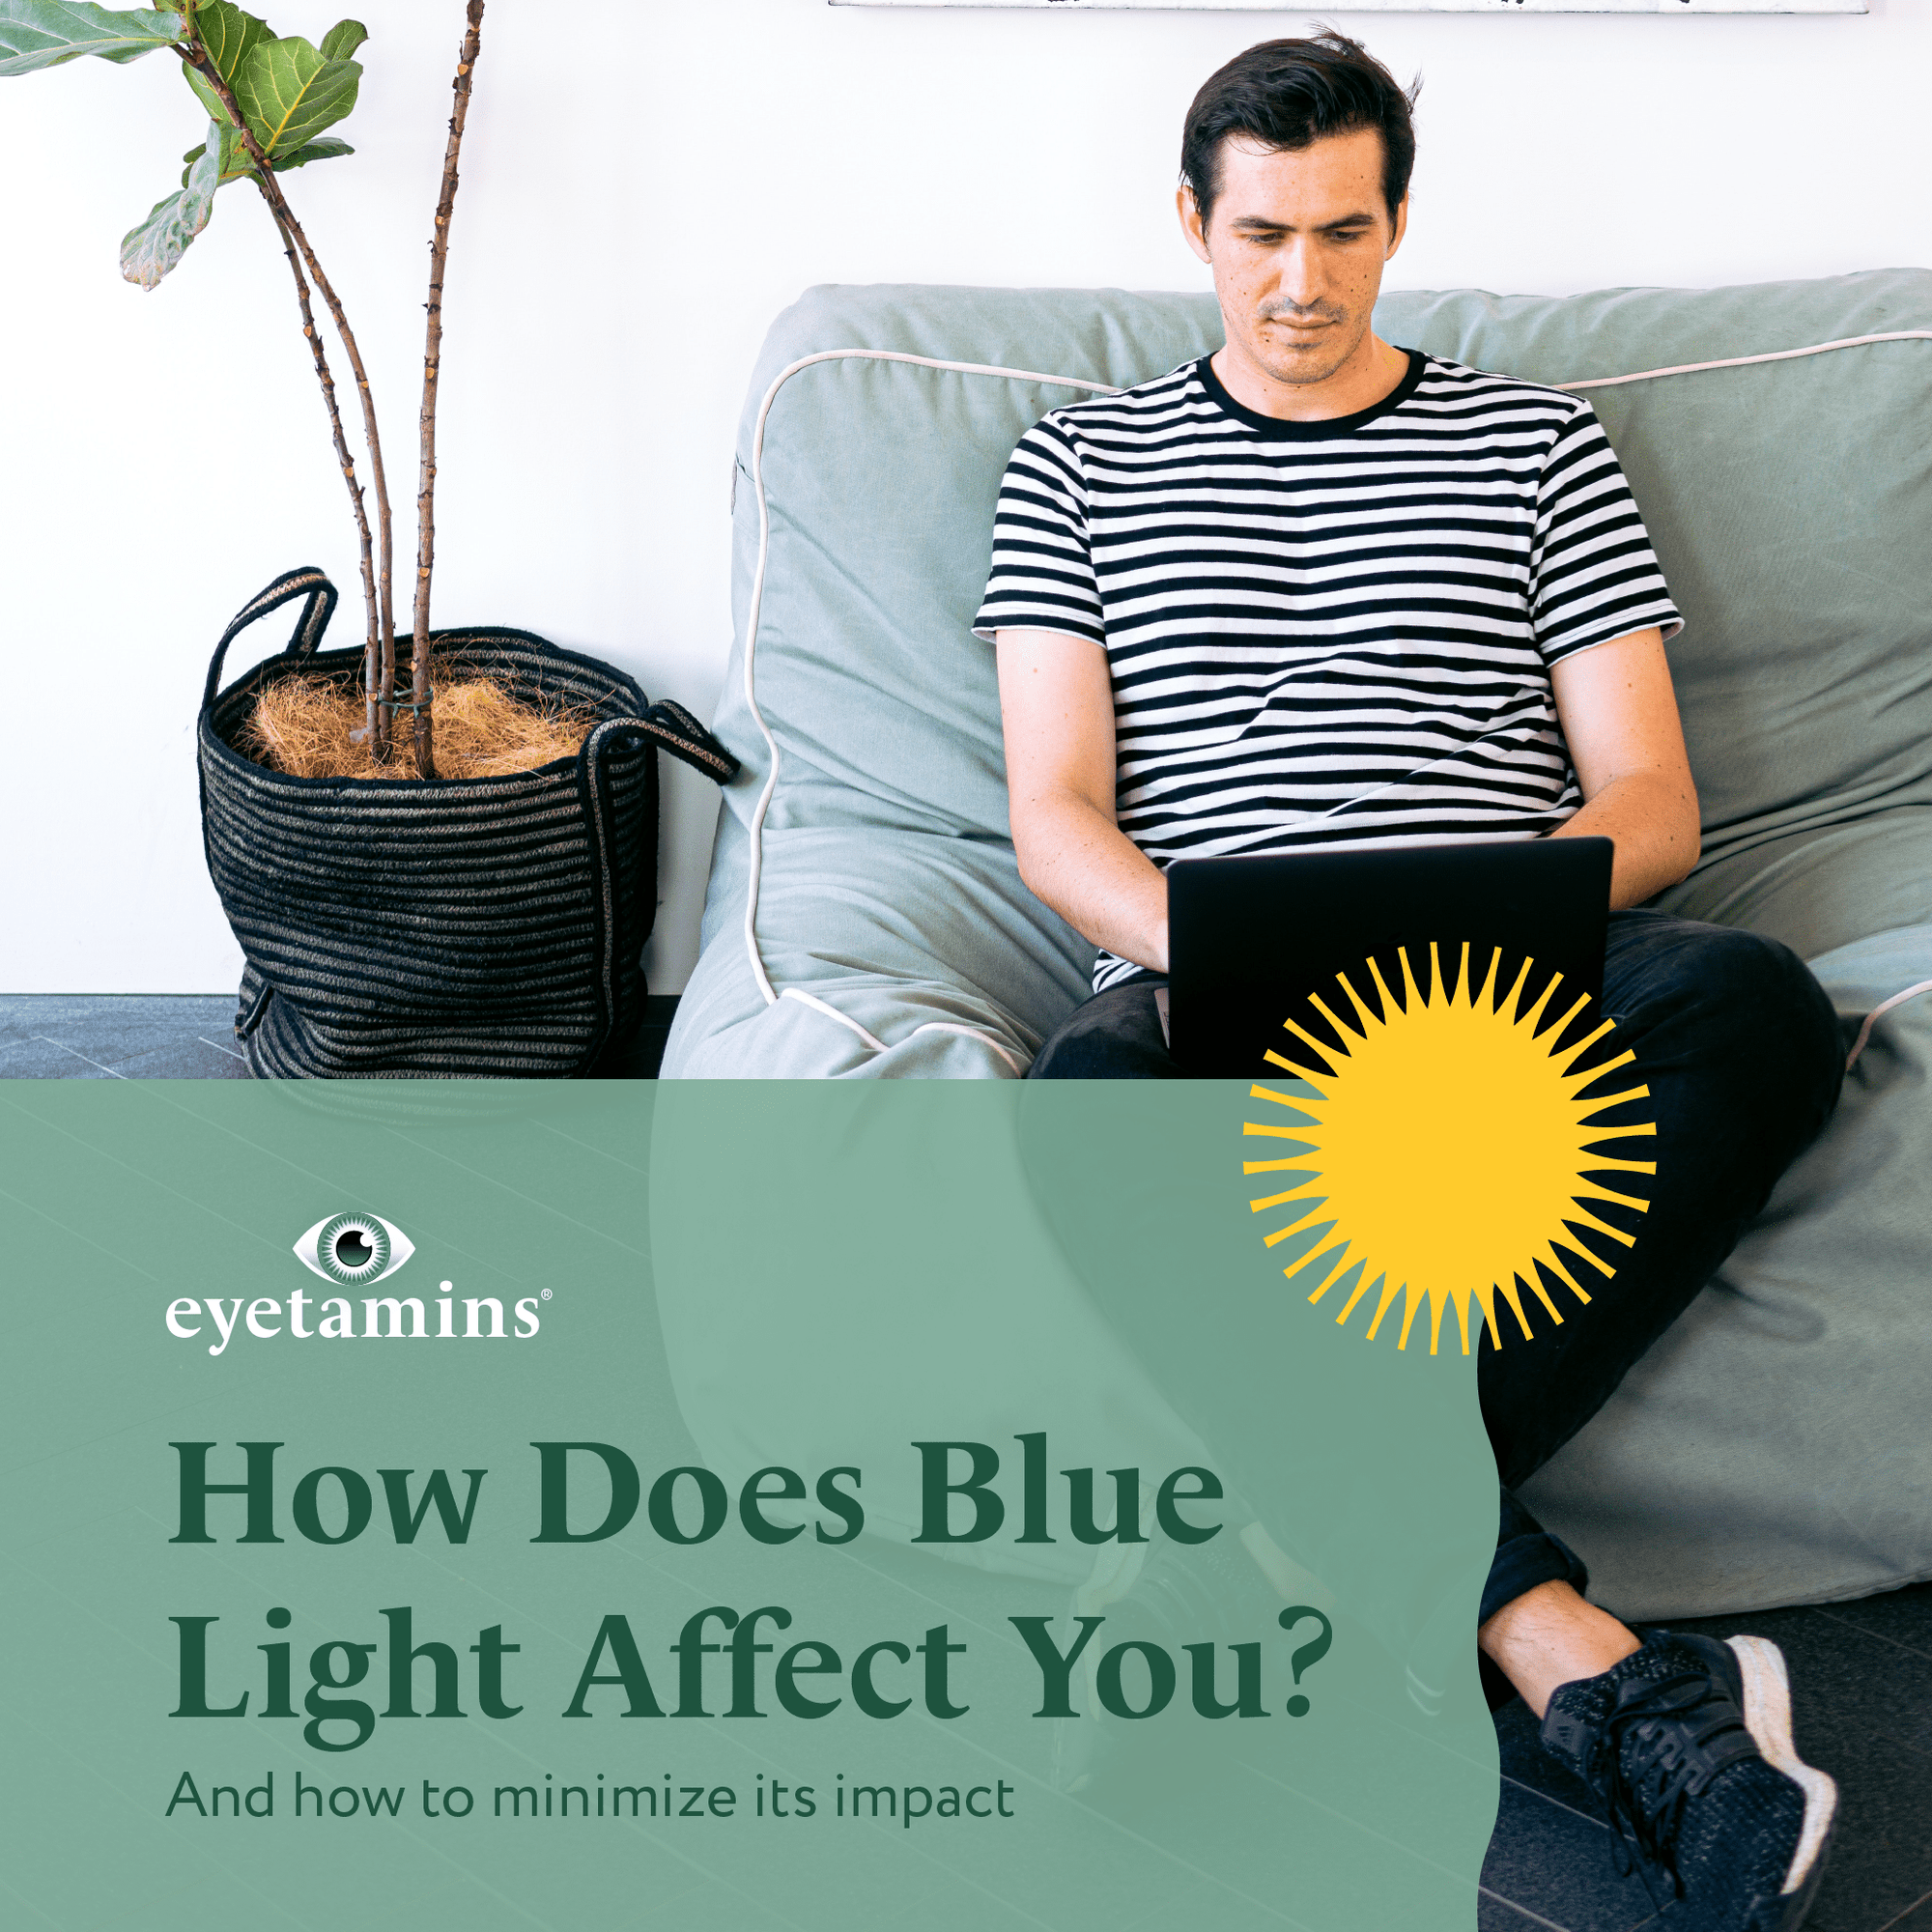 Eyetamins - How Does Blue Light Affect You?